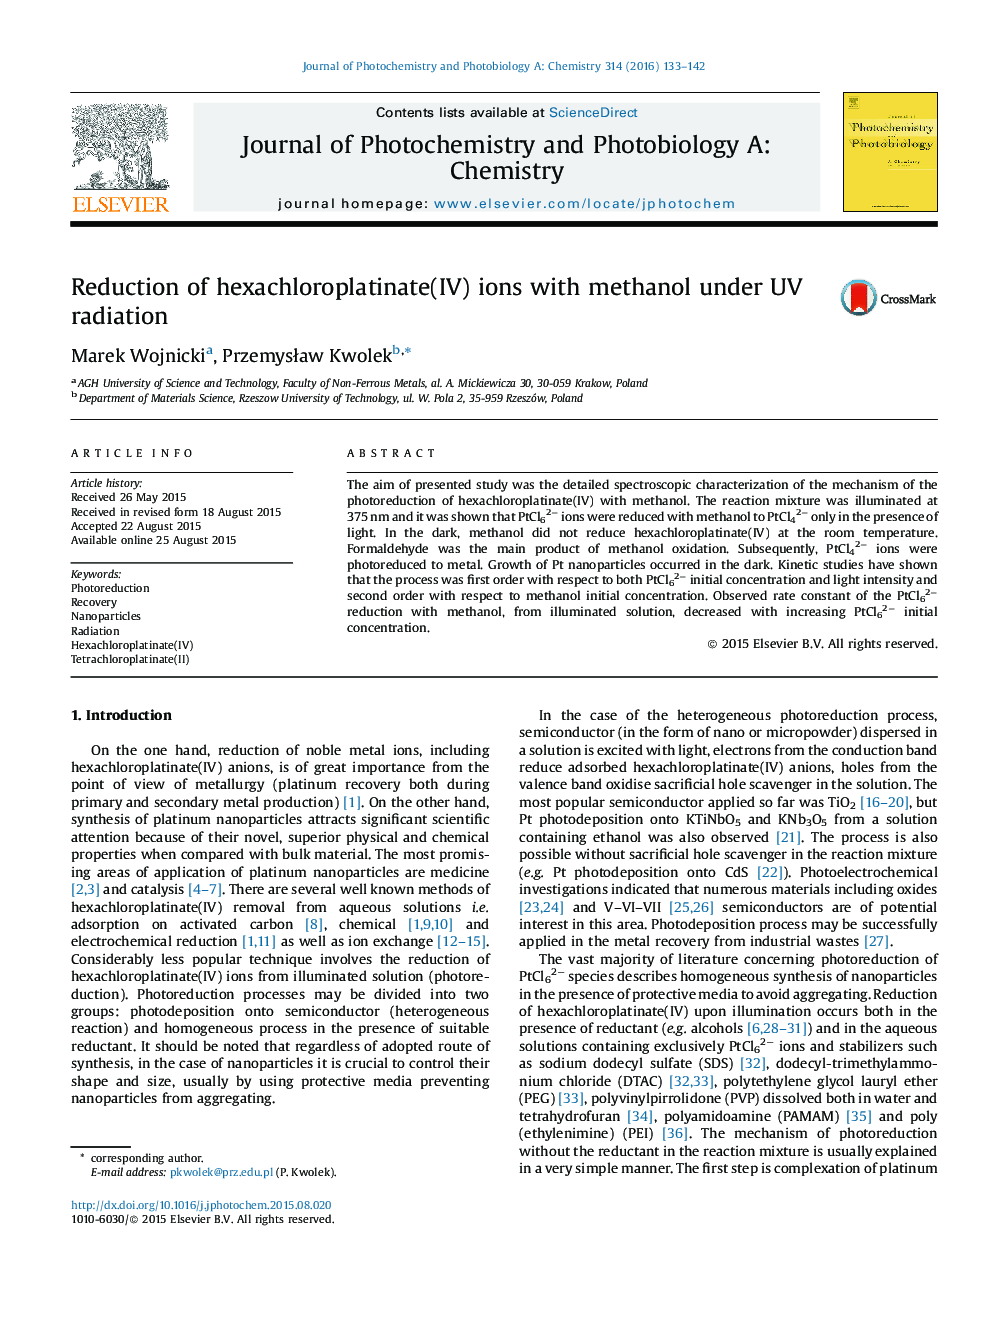 Reduction of hexachloroplatinate(IV) ions with methanol under UV radiation